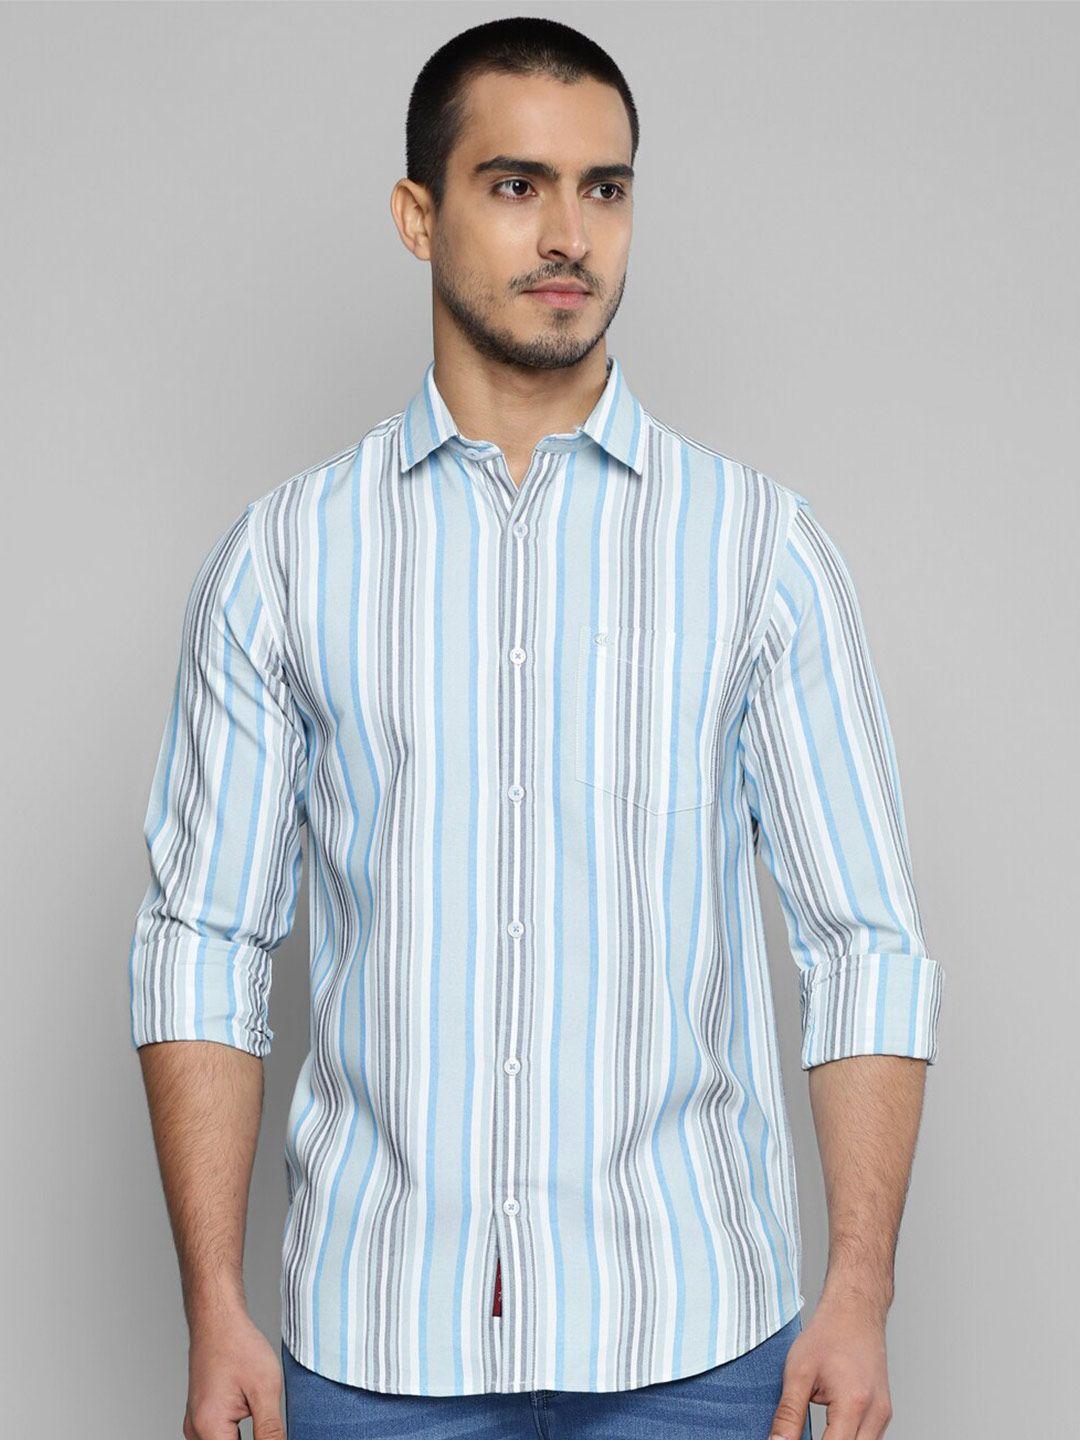 allen-cooper-india-slim-slim-fit-opaque-striped-cotton-casual-shirt